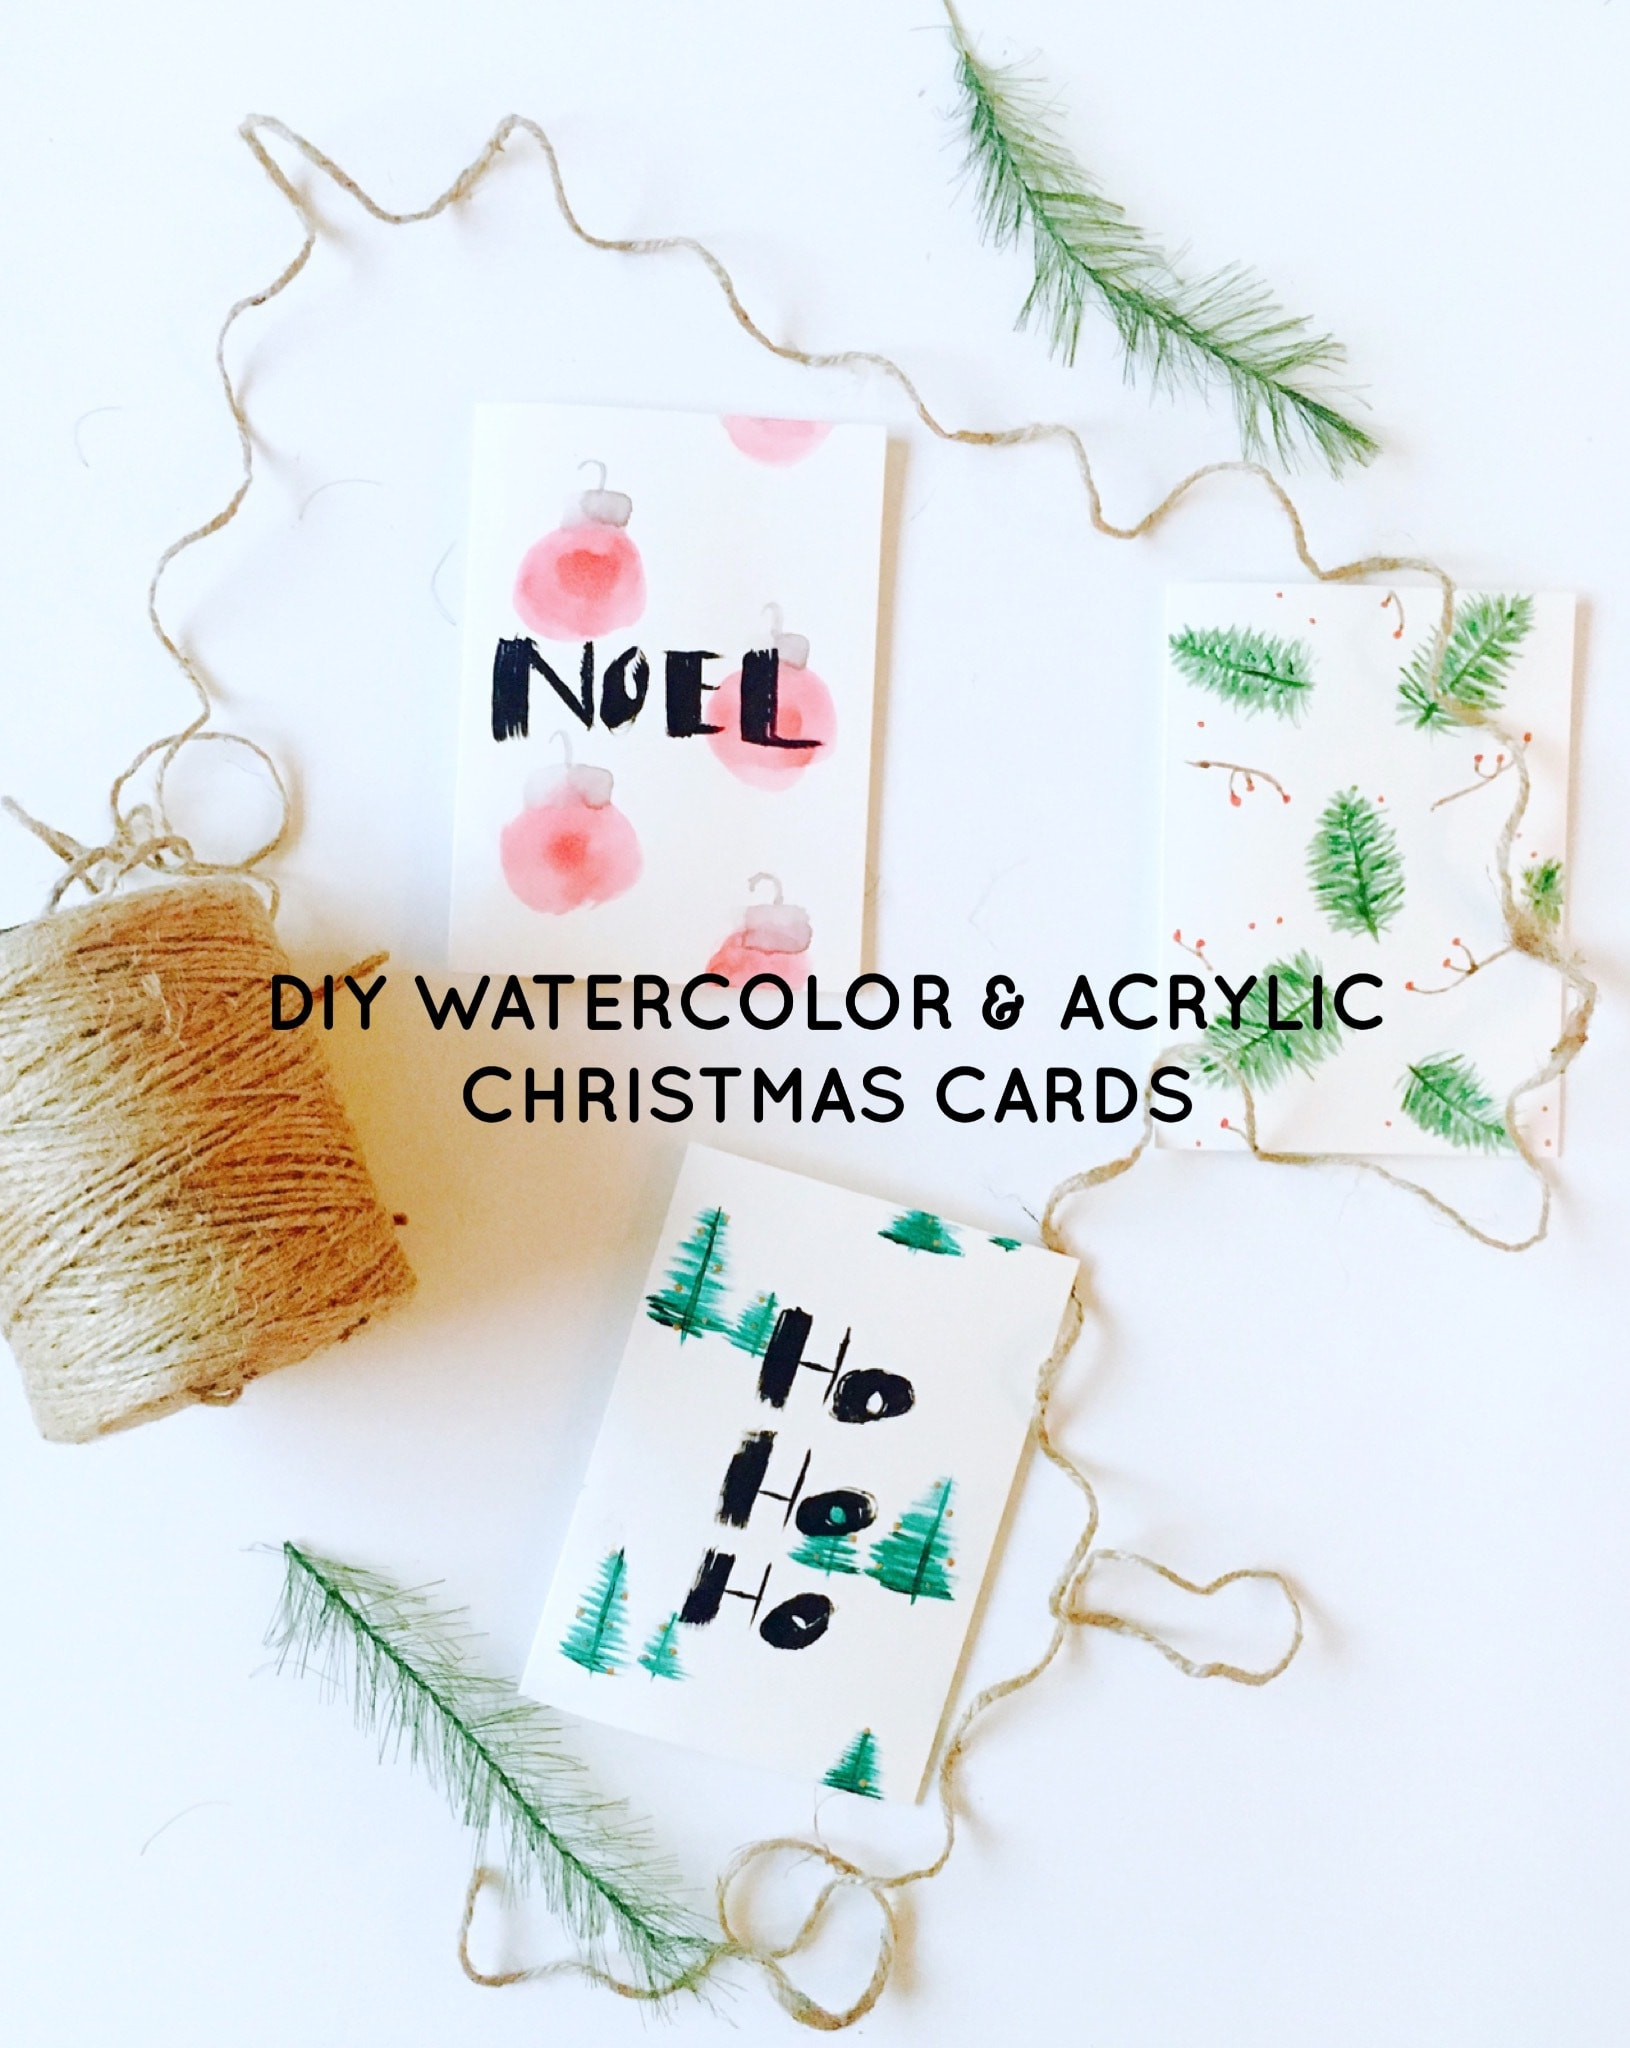 DIY Watercolor Christmas Cards
 DIY Watercolor & Acrylic Christmas Cards Life on Waller